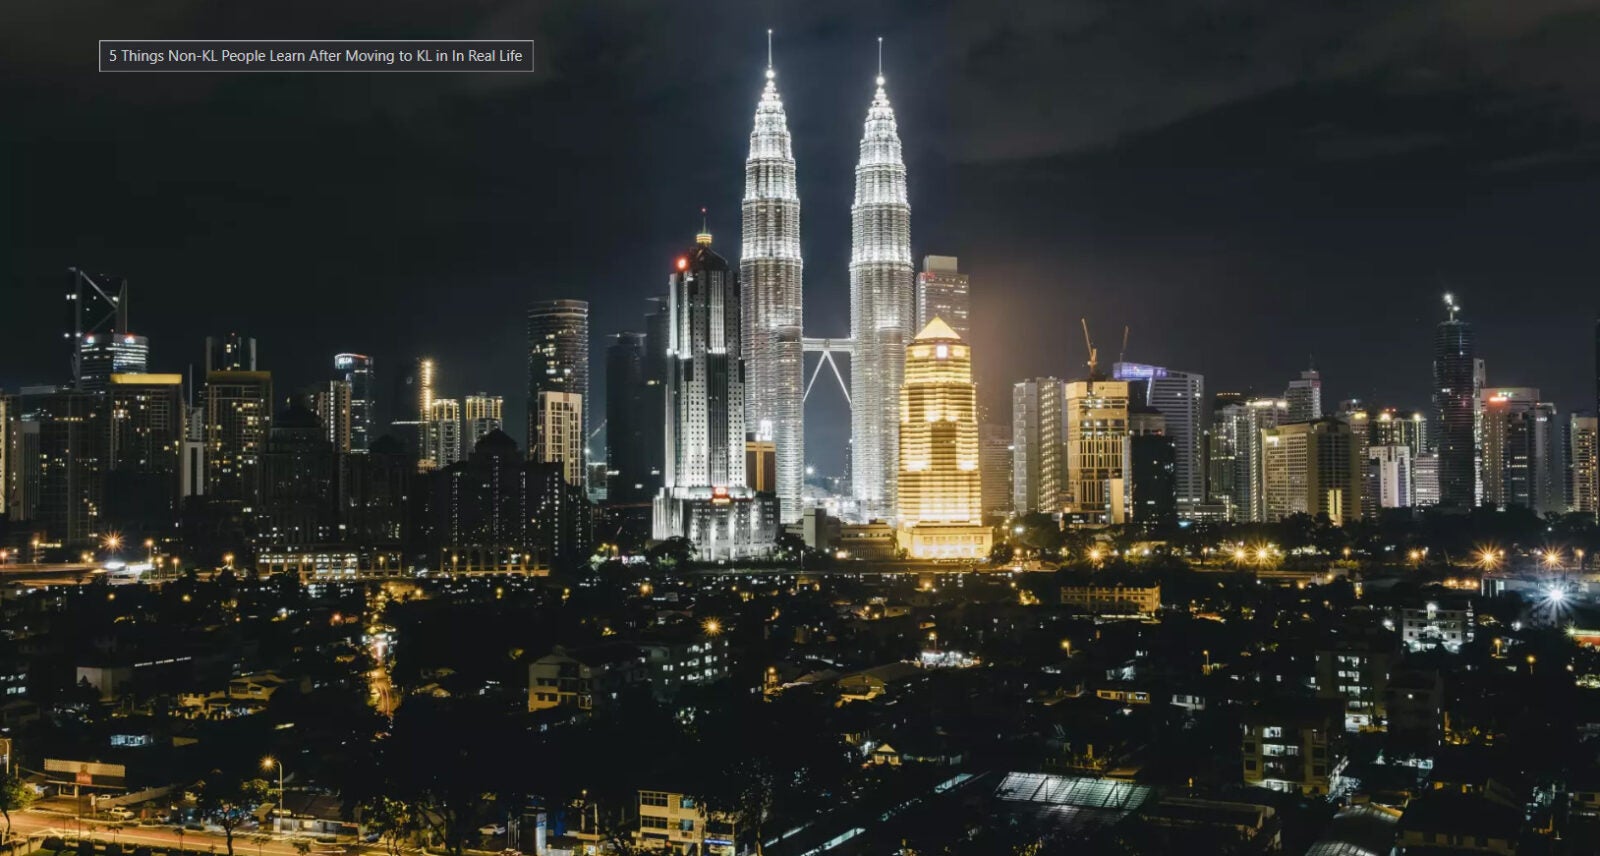 Skyline Of Kuala Lumpur At Night